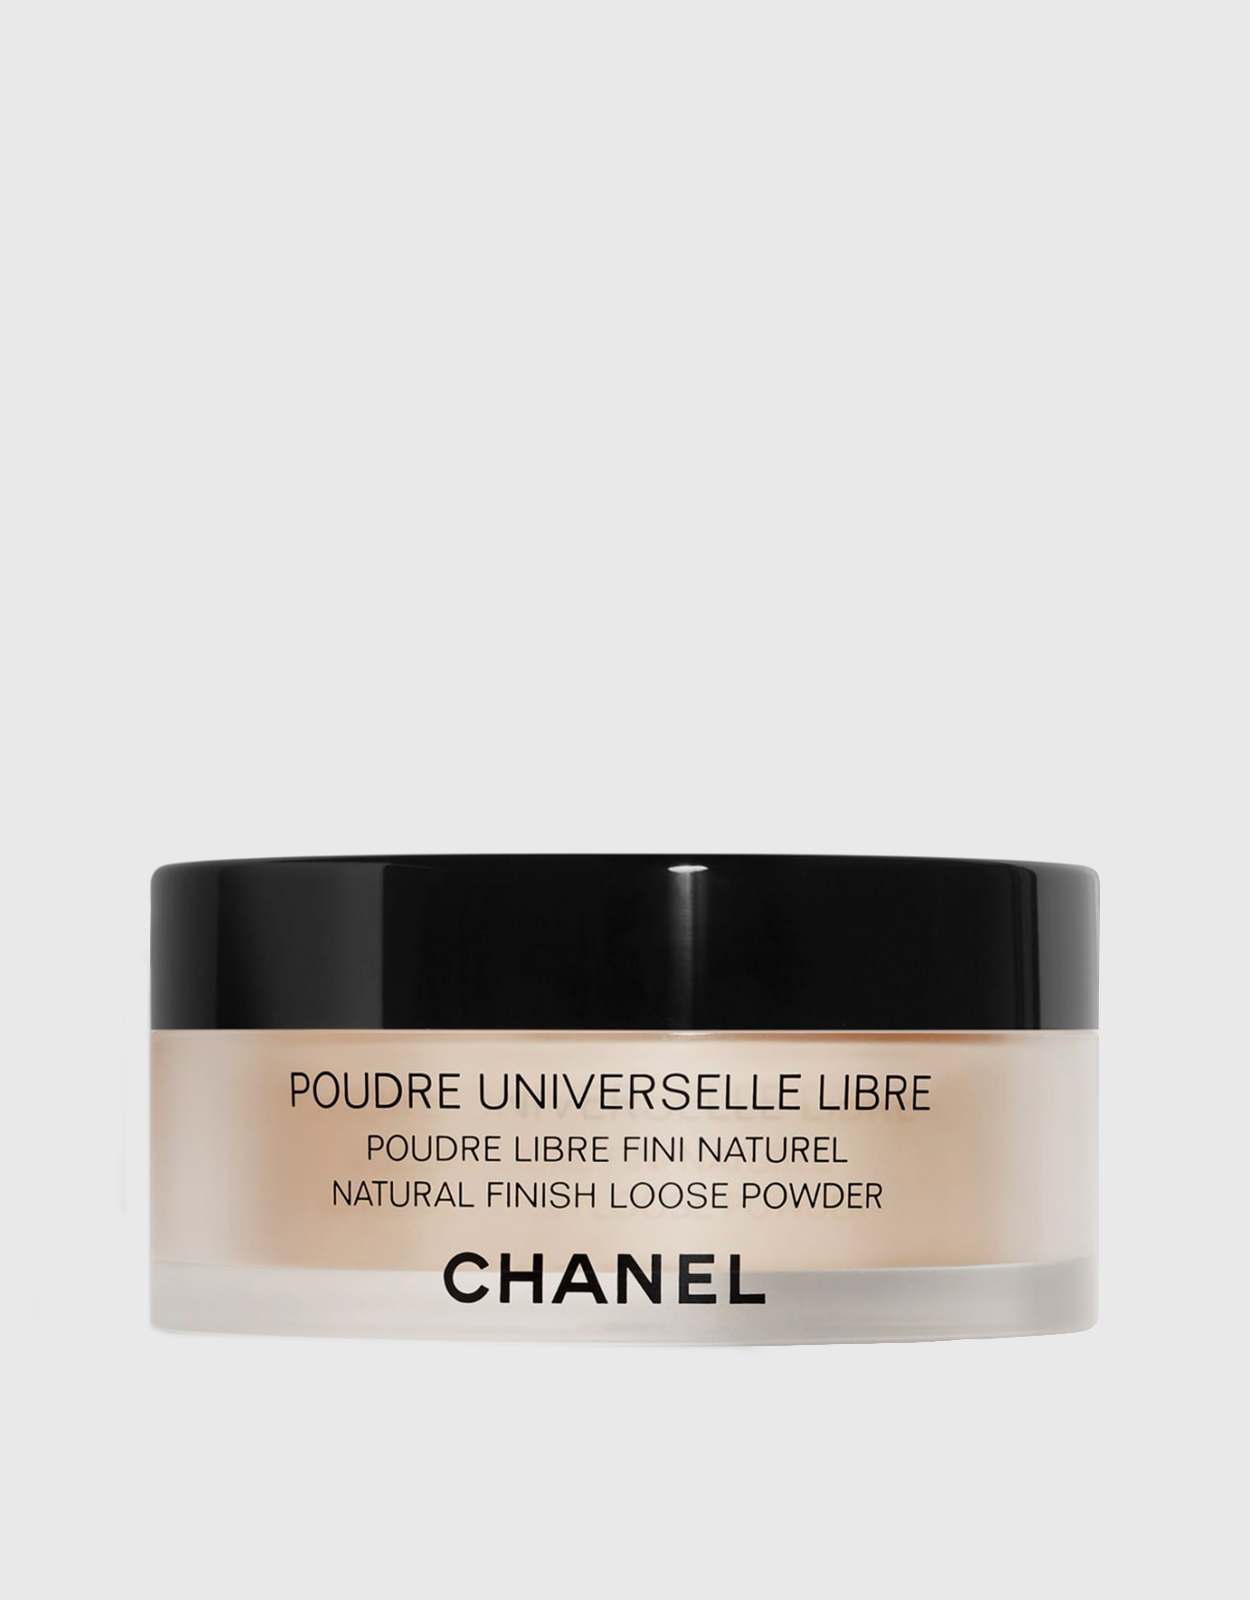 Chanel Beauty Universelle Libre Natural Finish Loose Powder-30 (Makeup,Face,Powder) IFCHIC.COM